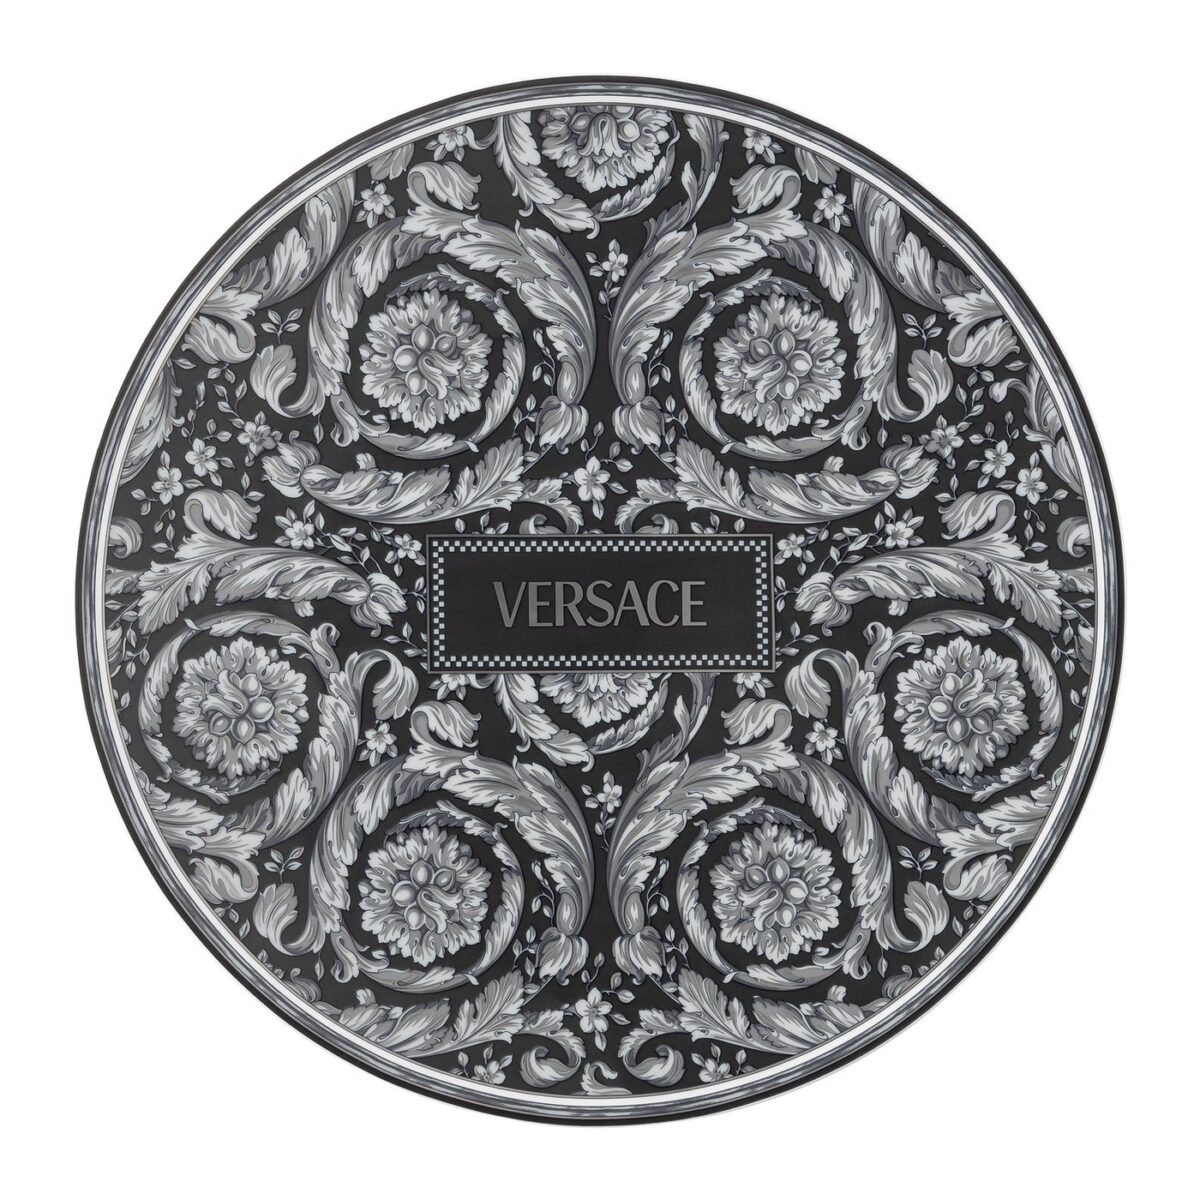 Versace Rosenthal Barocco Haze service plate